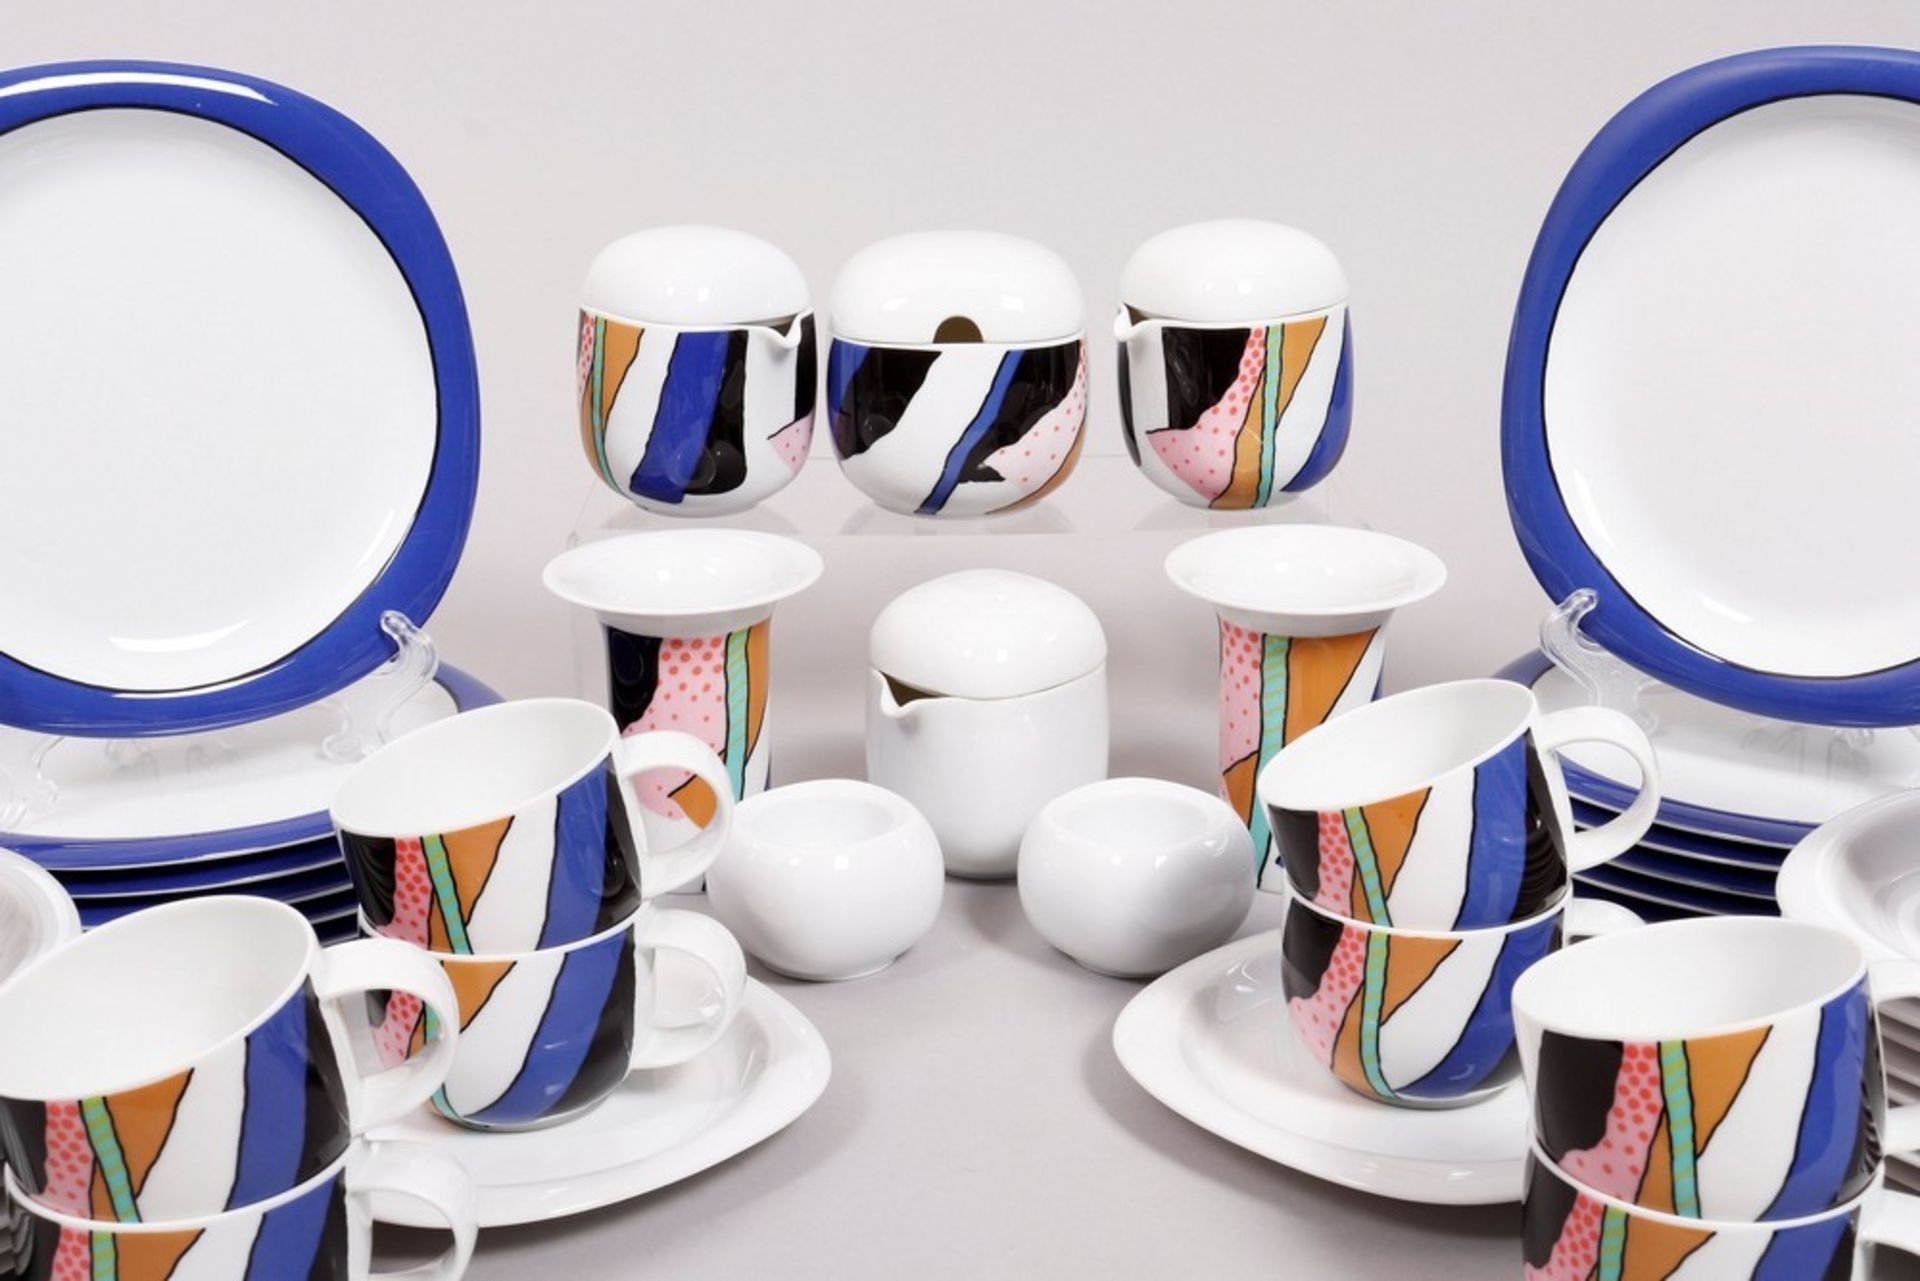 Coffee service, design Timo Sarpaneva for Rosenthal studio-line, form "Suomi" decor "Collage" - Image 2 of 6